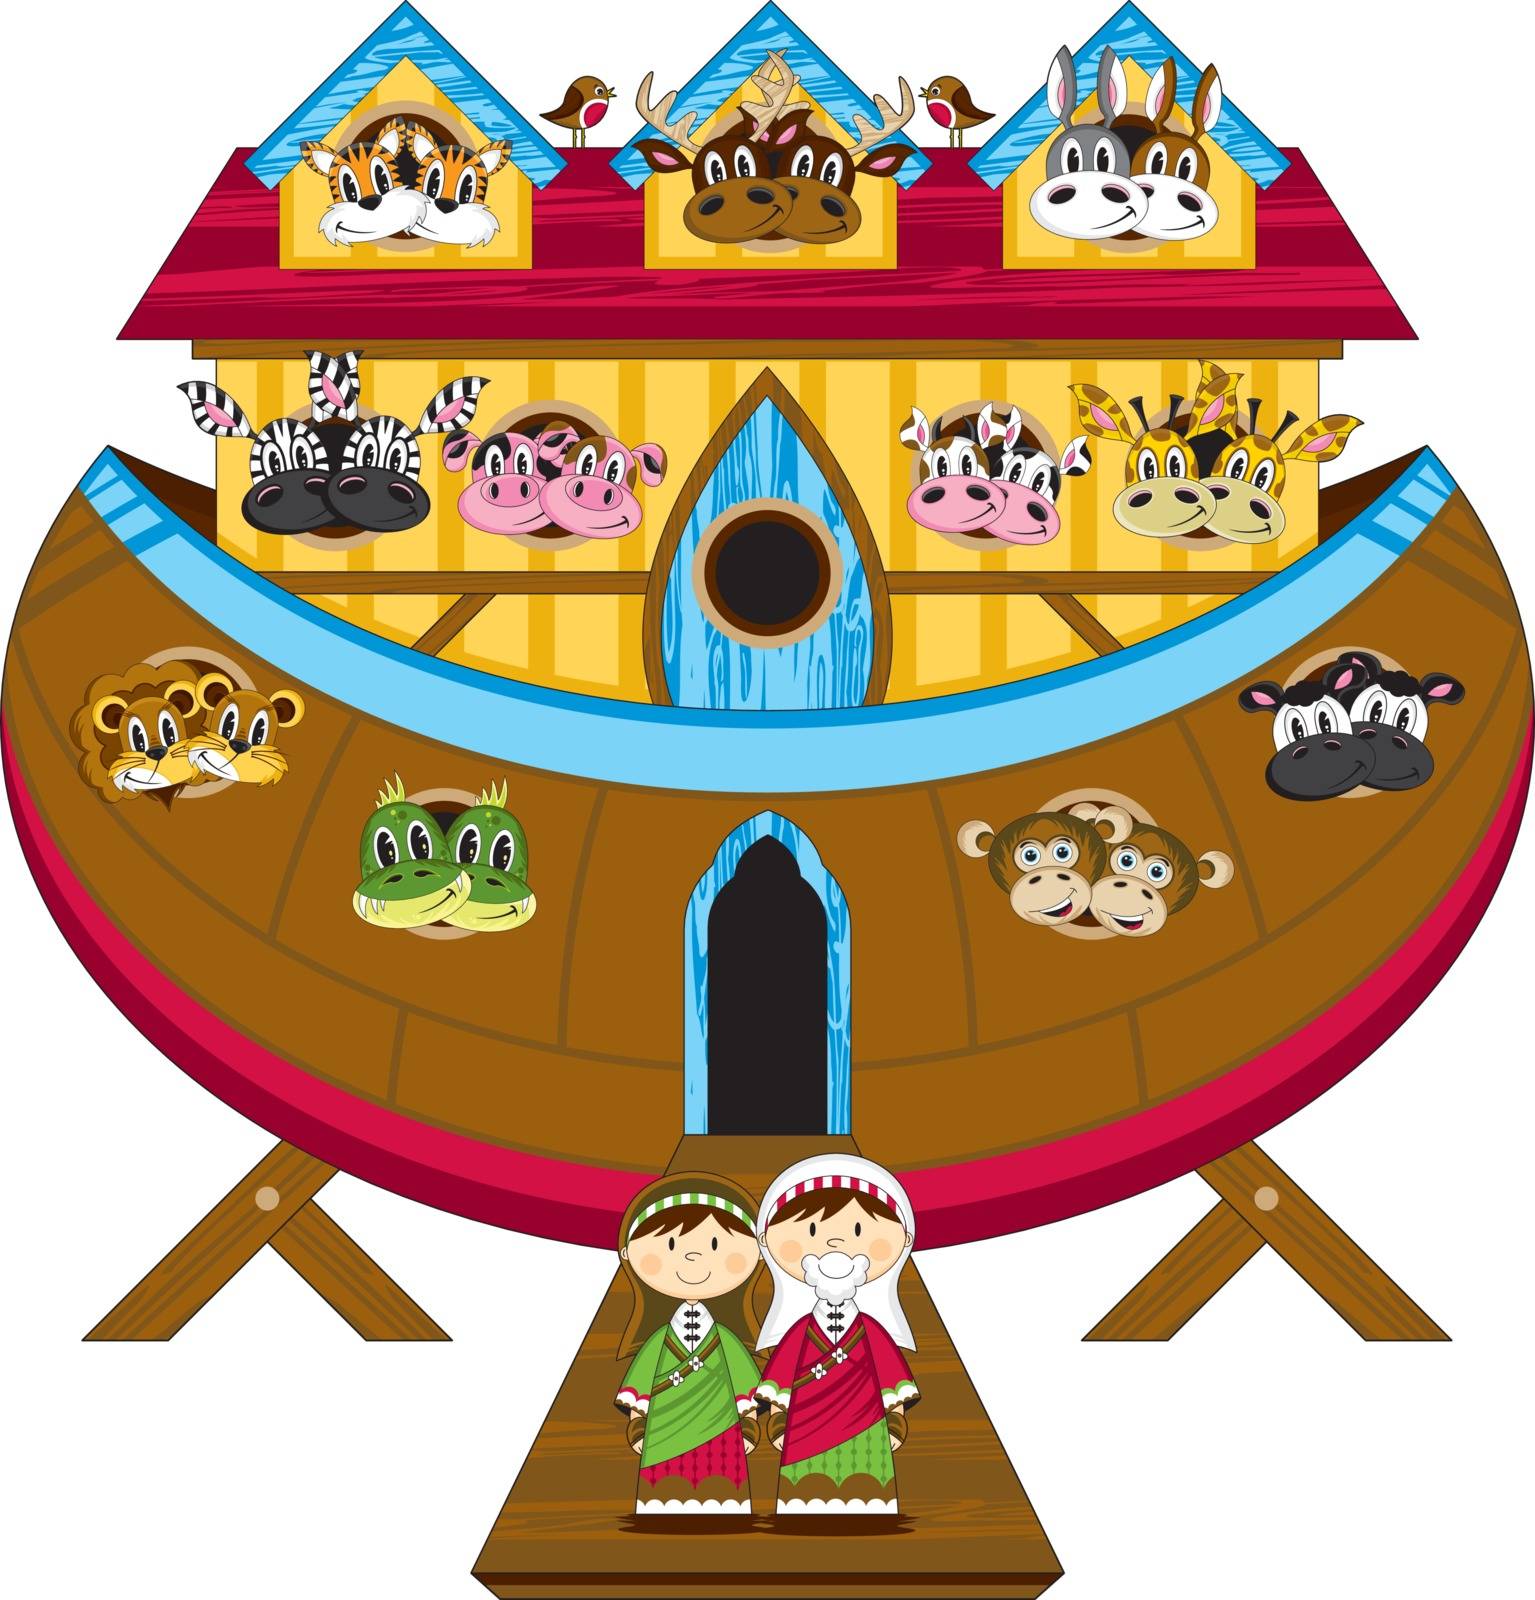 Cartoon Noah and the Ark with Animals by markmurphycreative